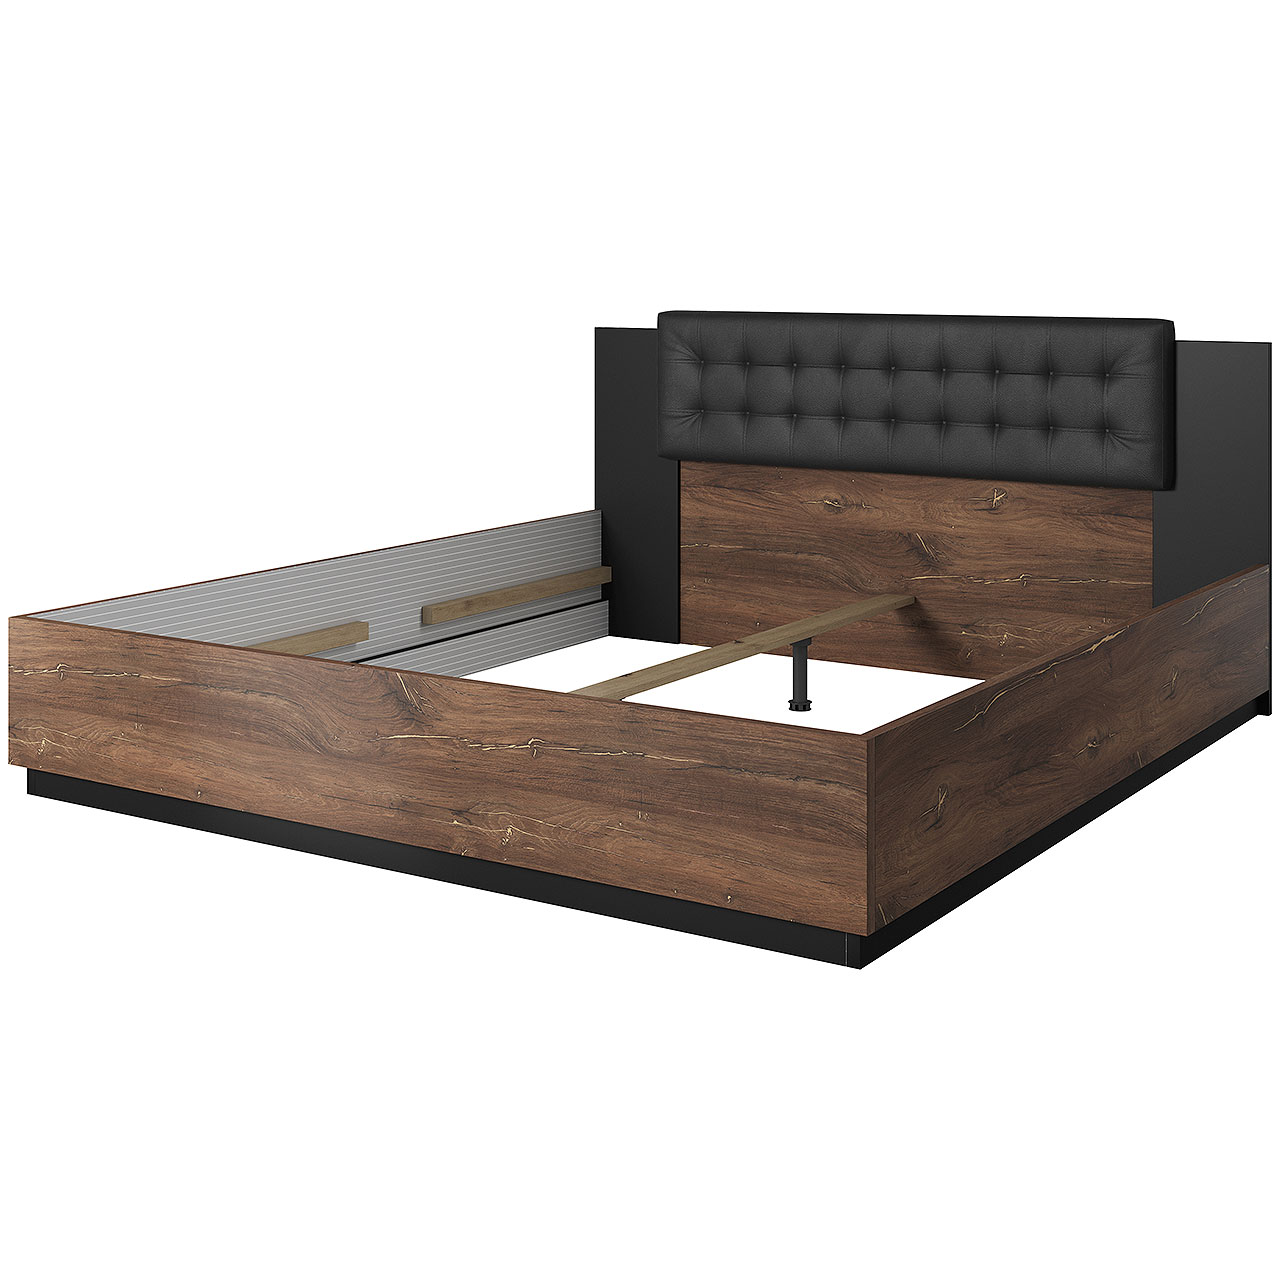 Bed 160x200 SIGMA SG31 oak flagstaf copper / black